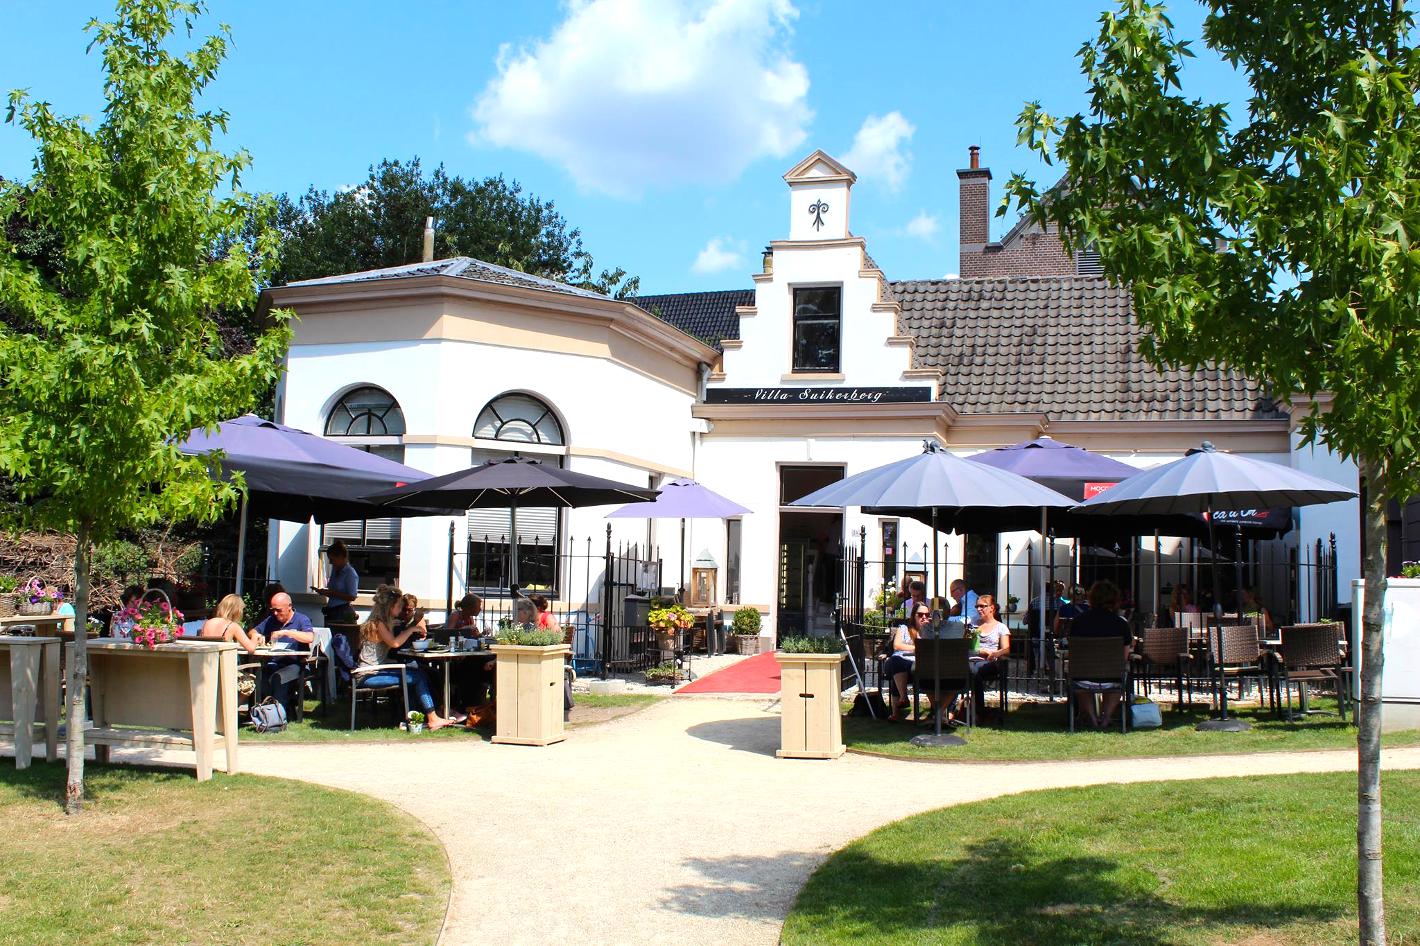 Photo Villa Suikerberg in Zwolle, Eat & drink, Enjoy delicious lunch, Enjoy nice drink - #1